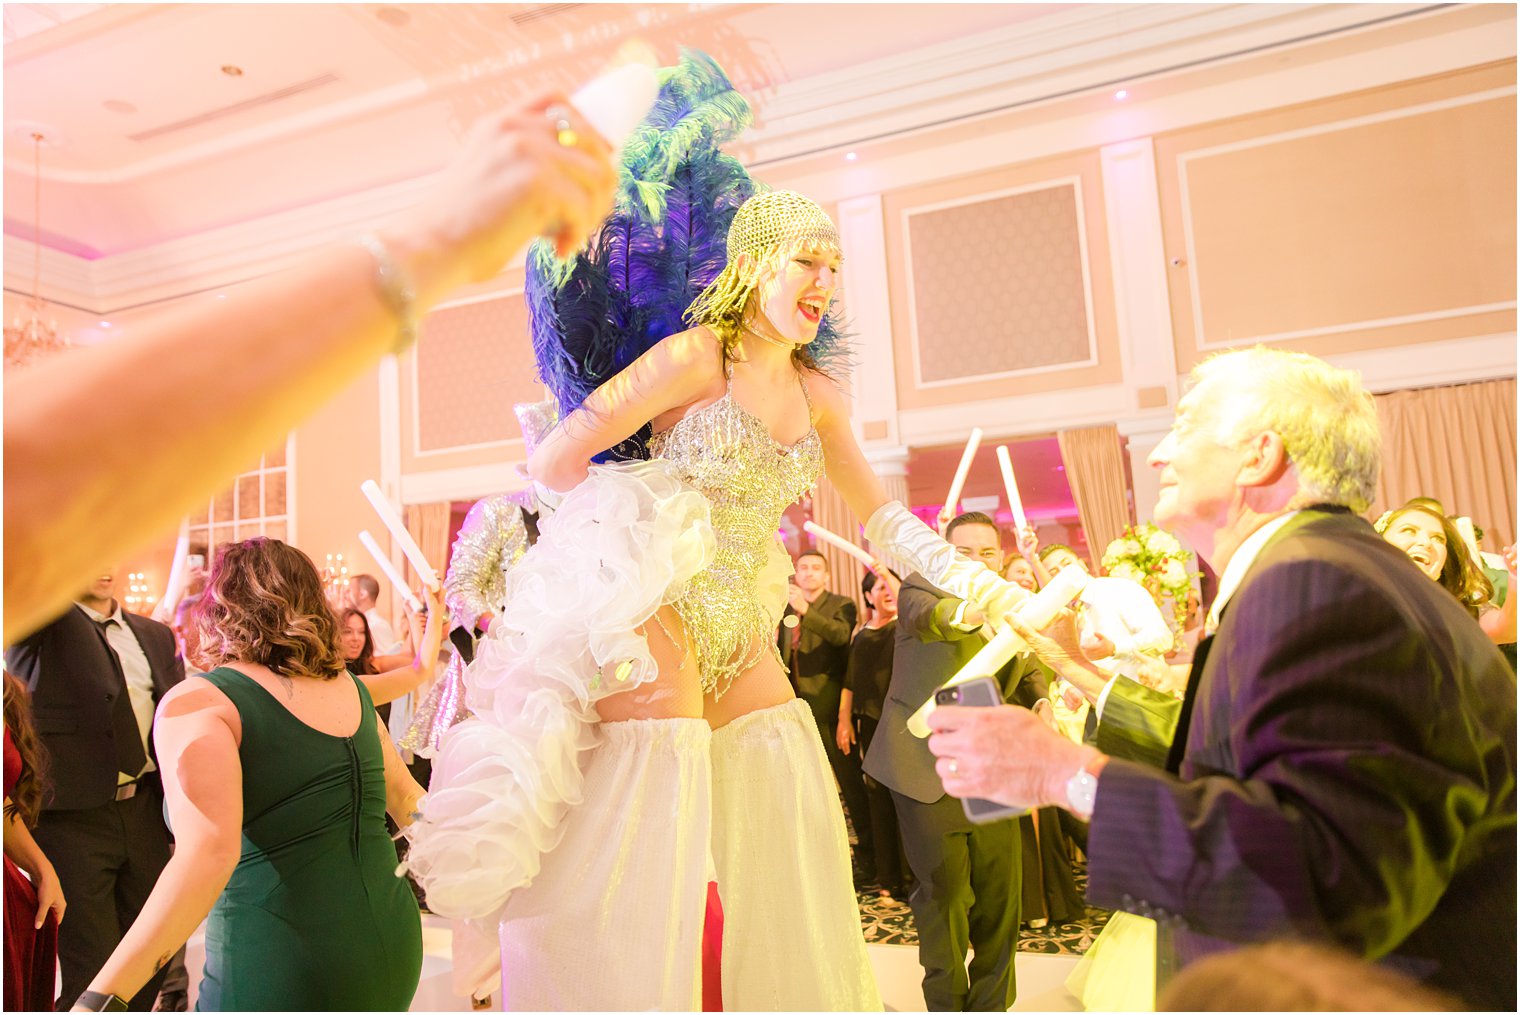 Idalia Photography captures NJ wedding entertainment